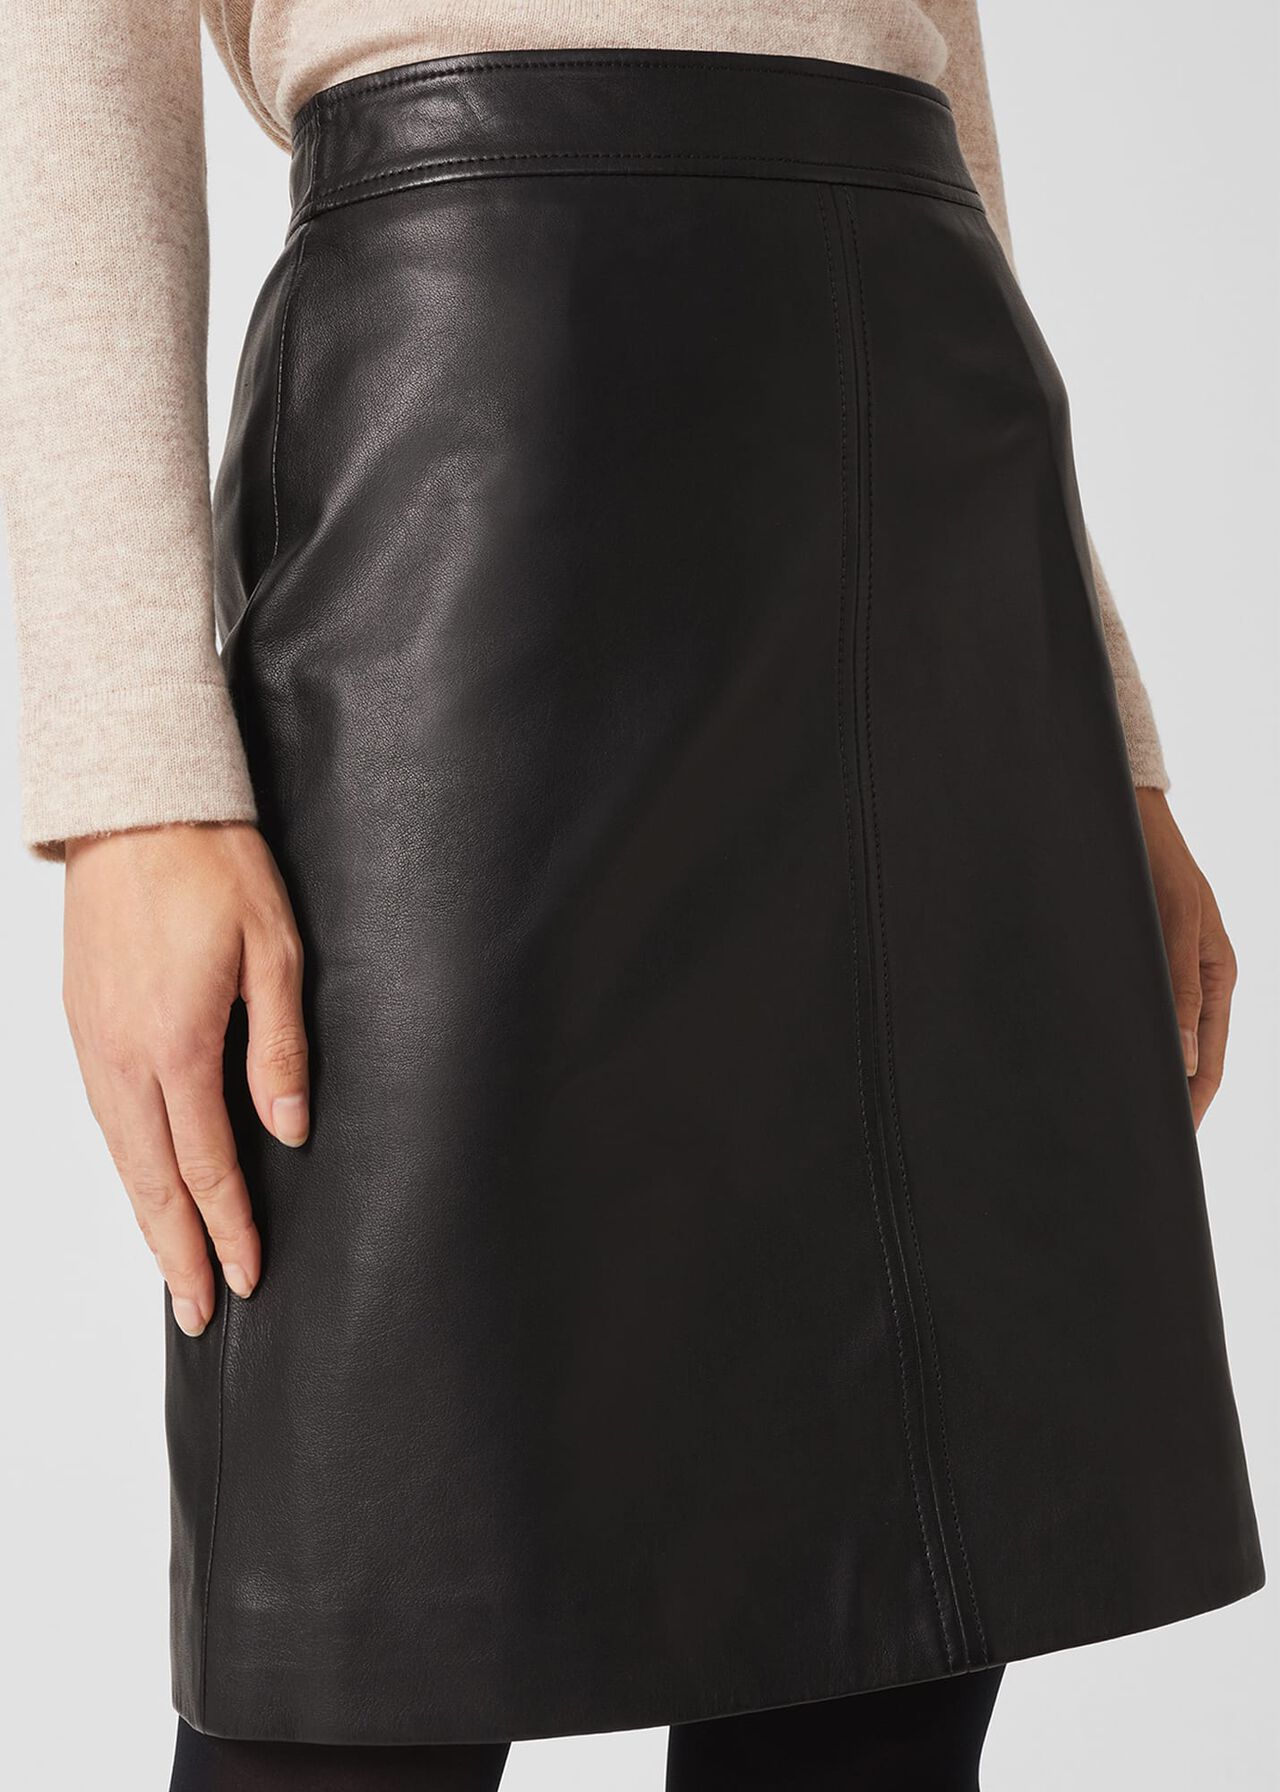 Annalise A Line Leather Skirt, Black, hi-res